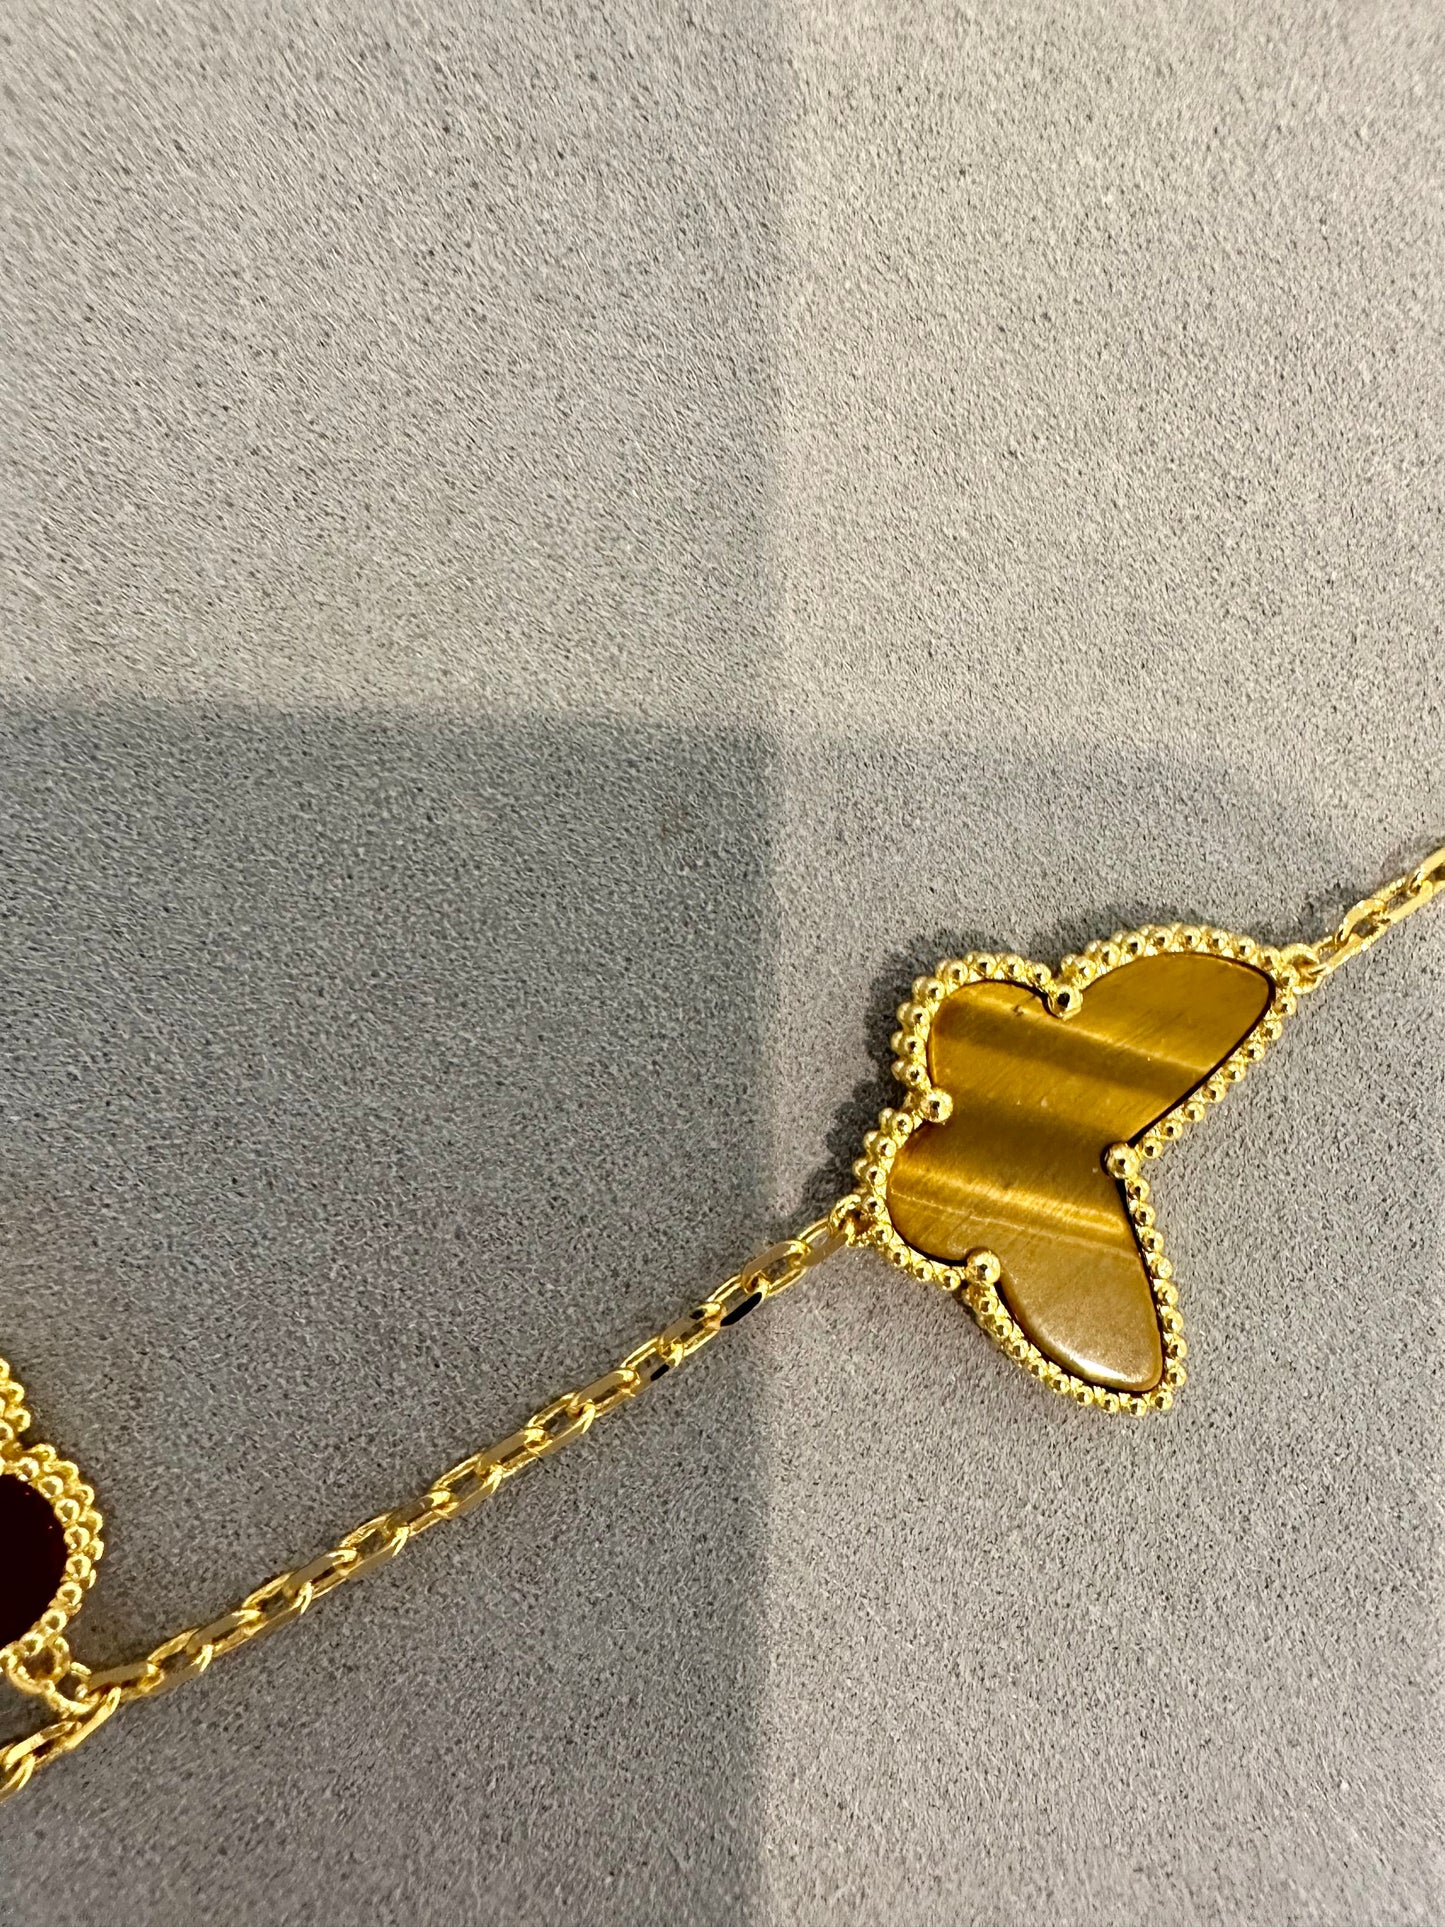 Butterfly clover bracelet 925 silver 18k  gold plated clover bracelet 19cm - ParadiseKissCo